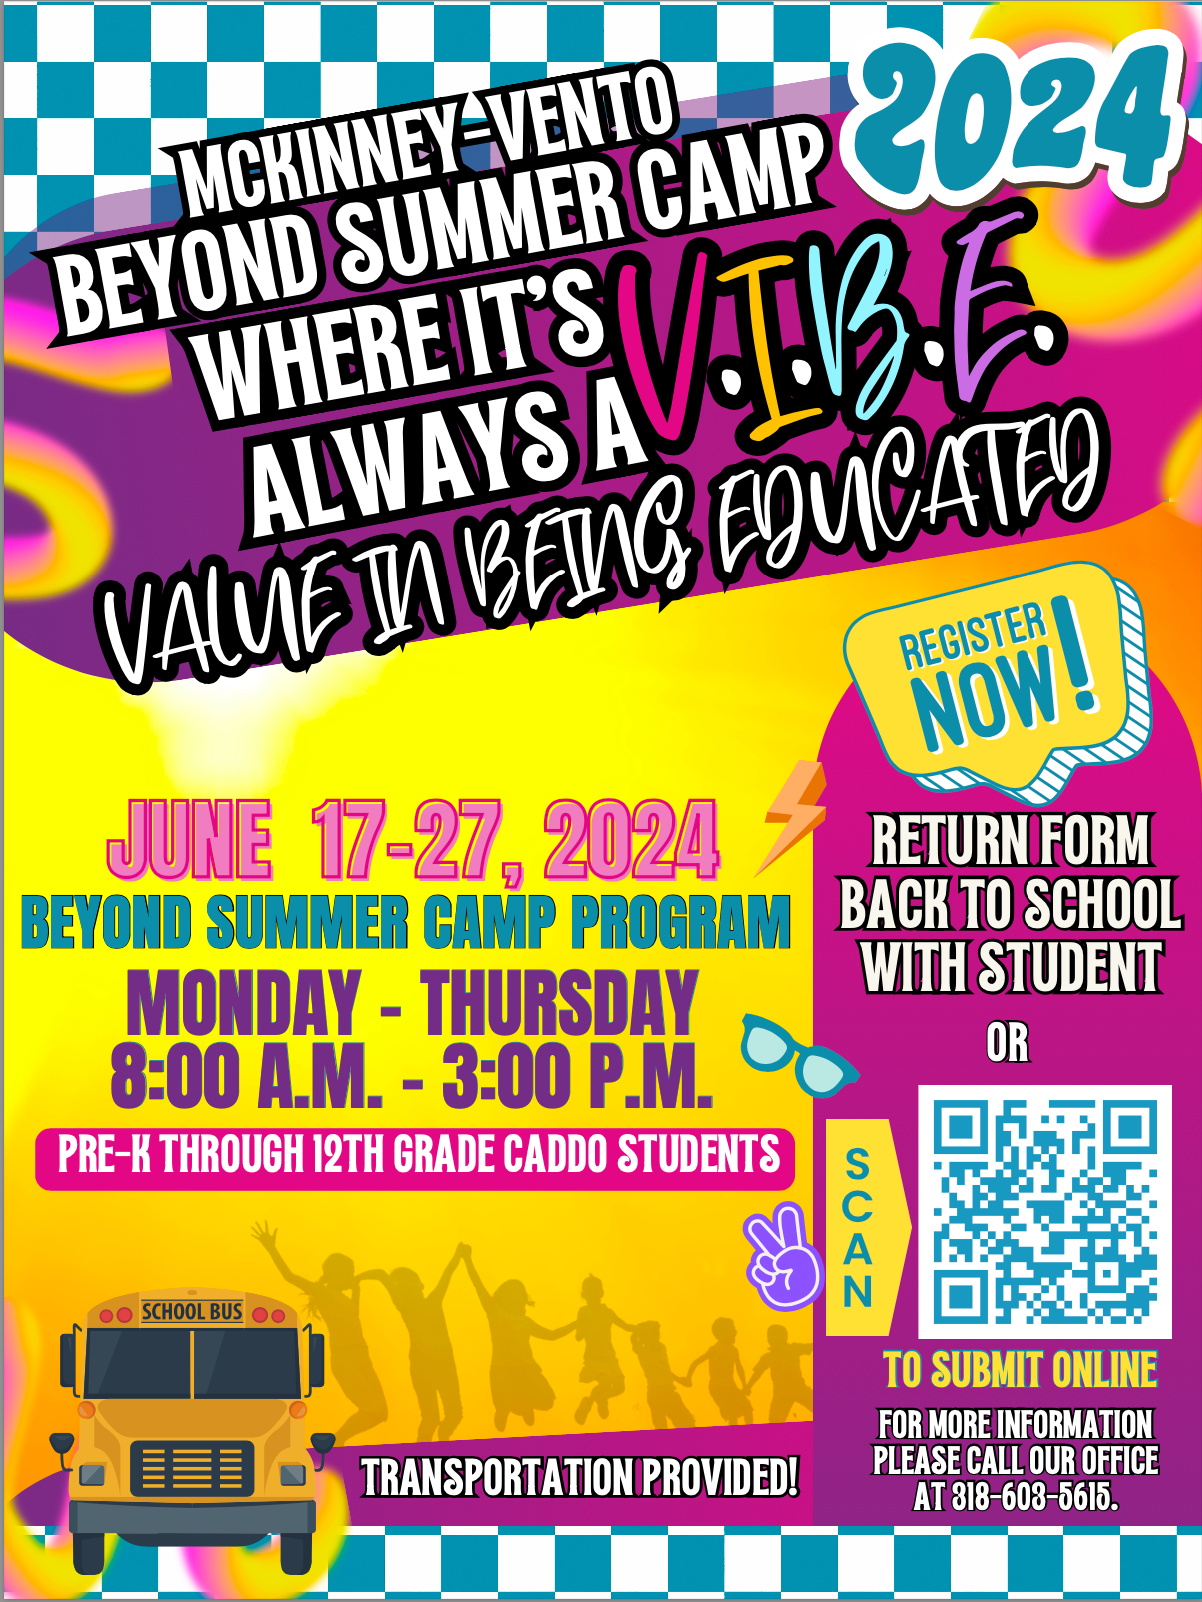 McKinney- Vento Summer Camp where it's always a vibe. June 17-27, 2024 Beyond camp program. Monday - Thursday. 8:00 AM - 3:00 PM Pre-k through 12th grade caddo students